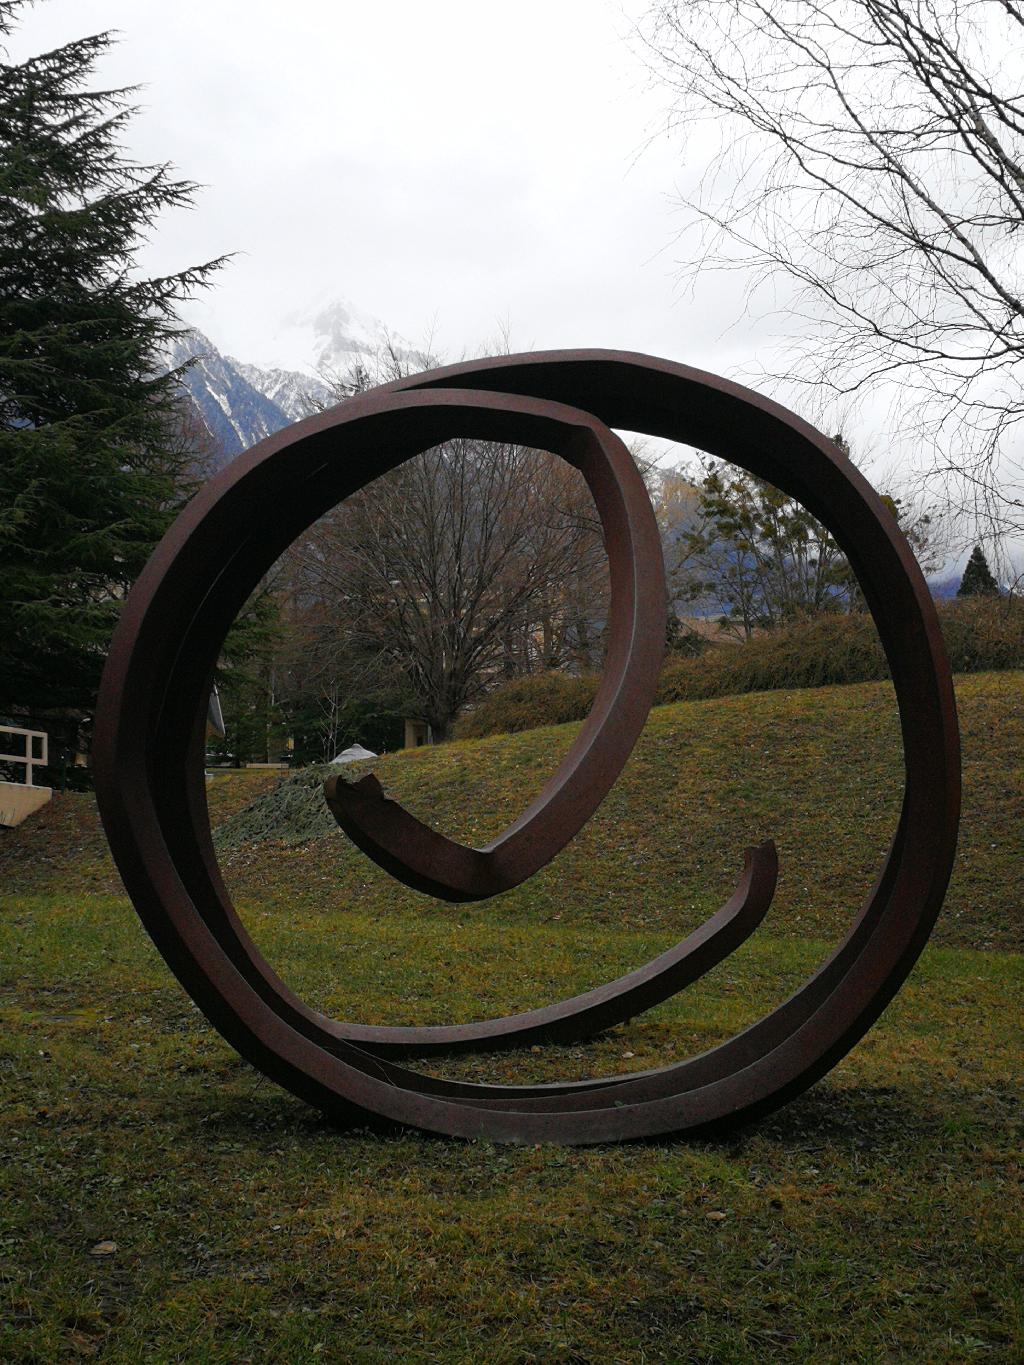 Parc des sculptures in Martigny